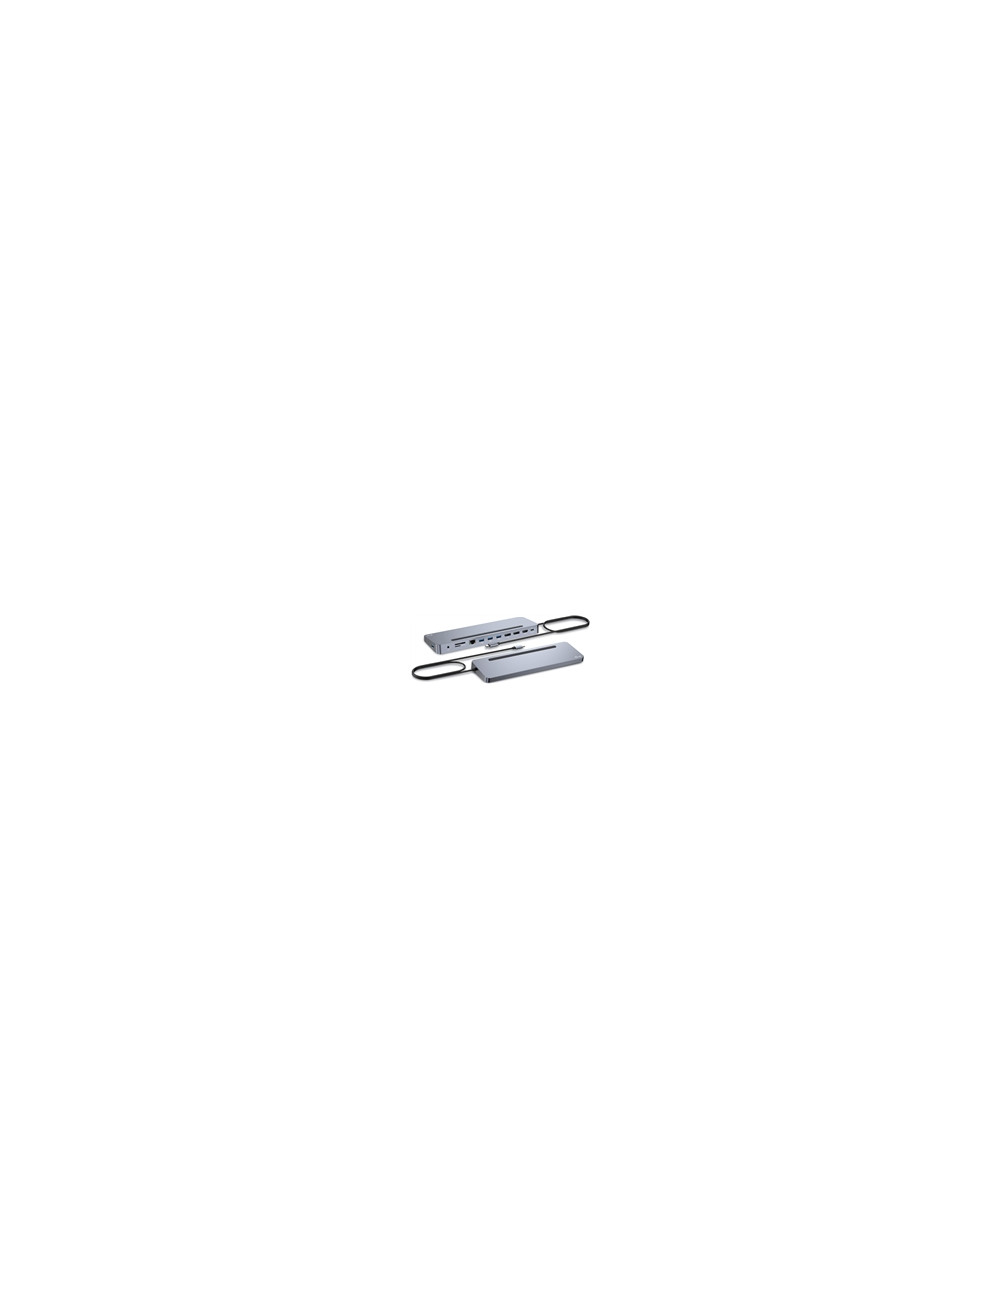 I-TEC USB-C Metal Ergonomic 4K 3x Displ